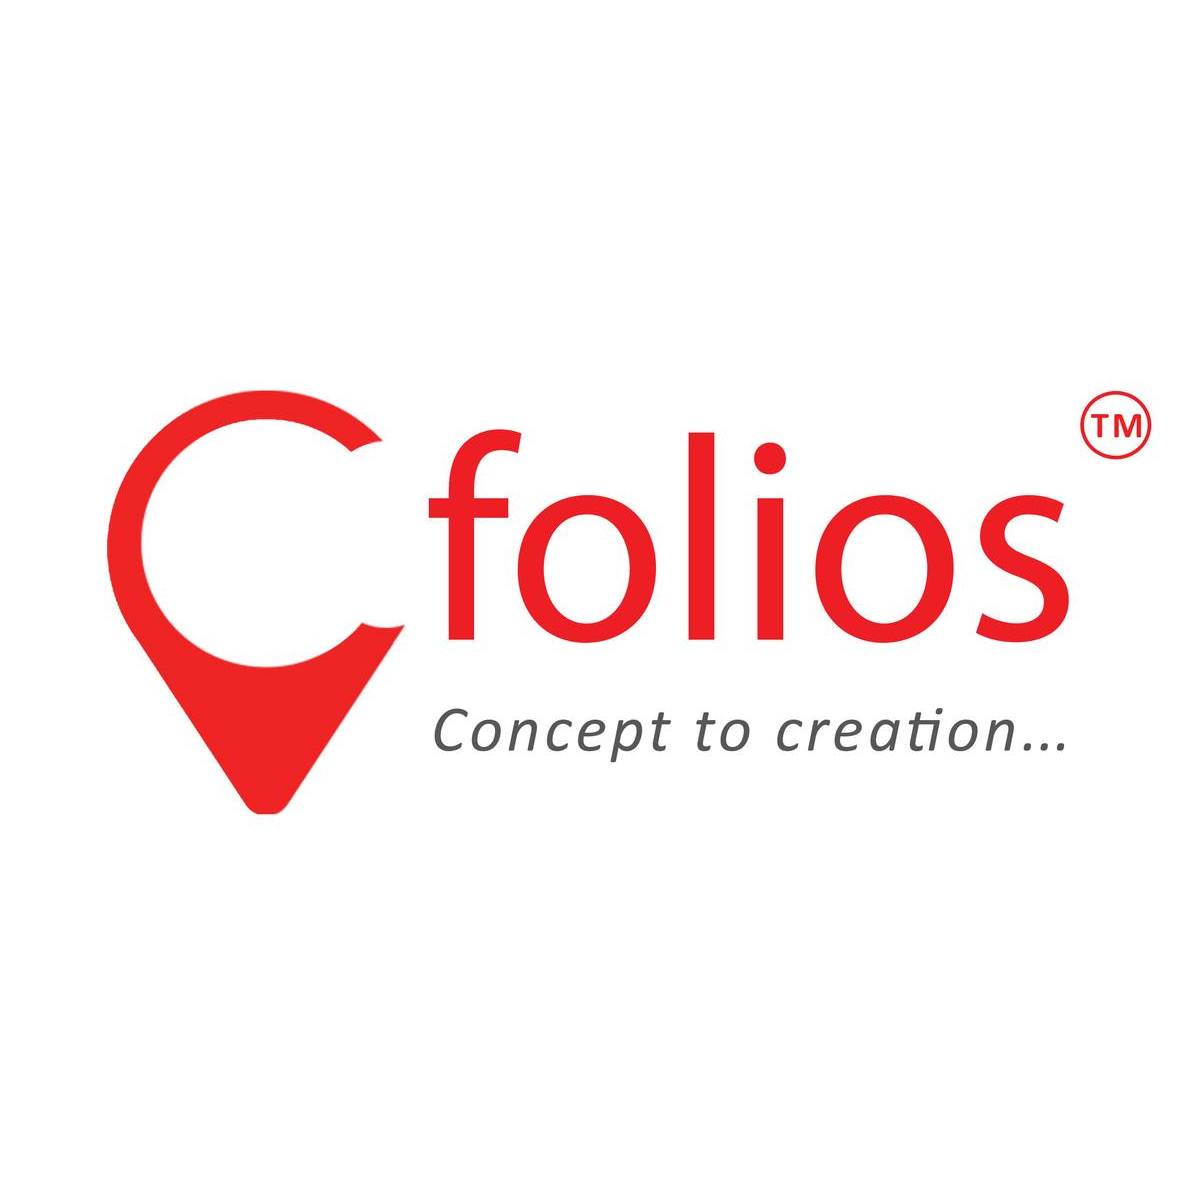 CFOLIOS DESIGN AND CONSTRUCTION SOLUTIONS PVT LTD Logo